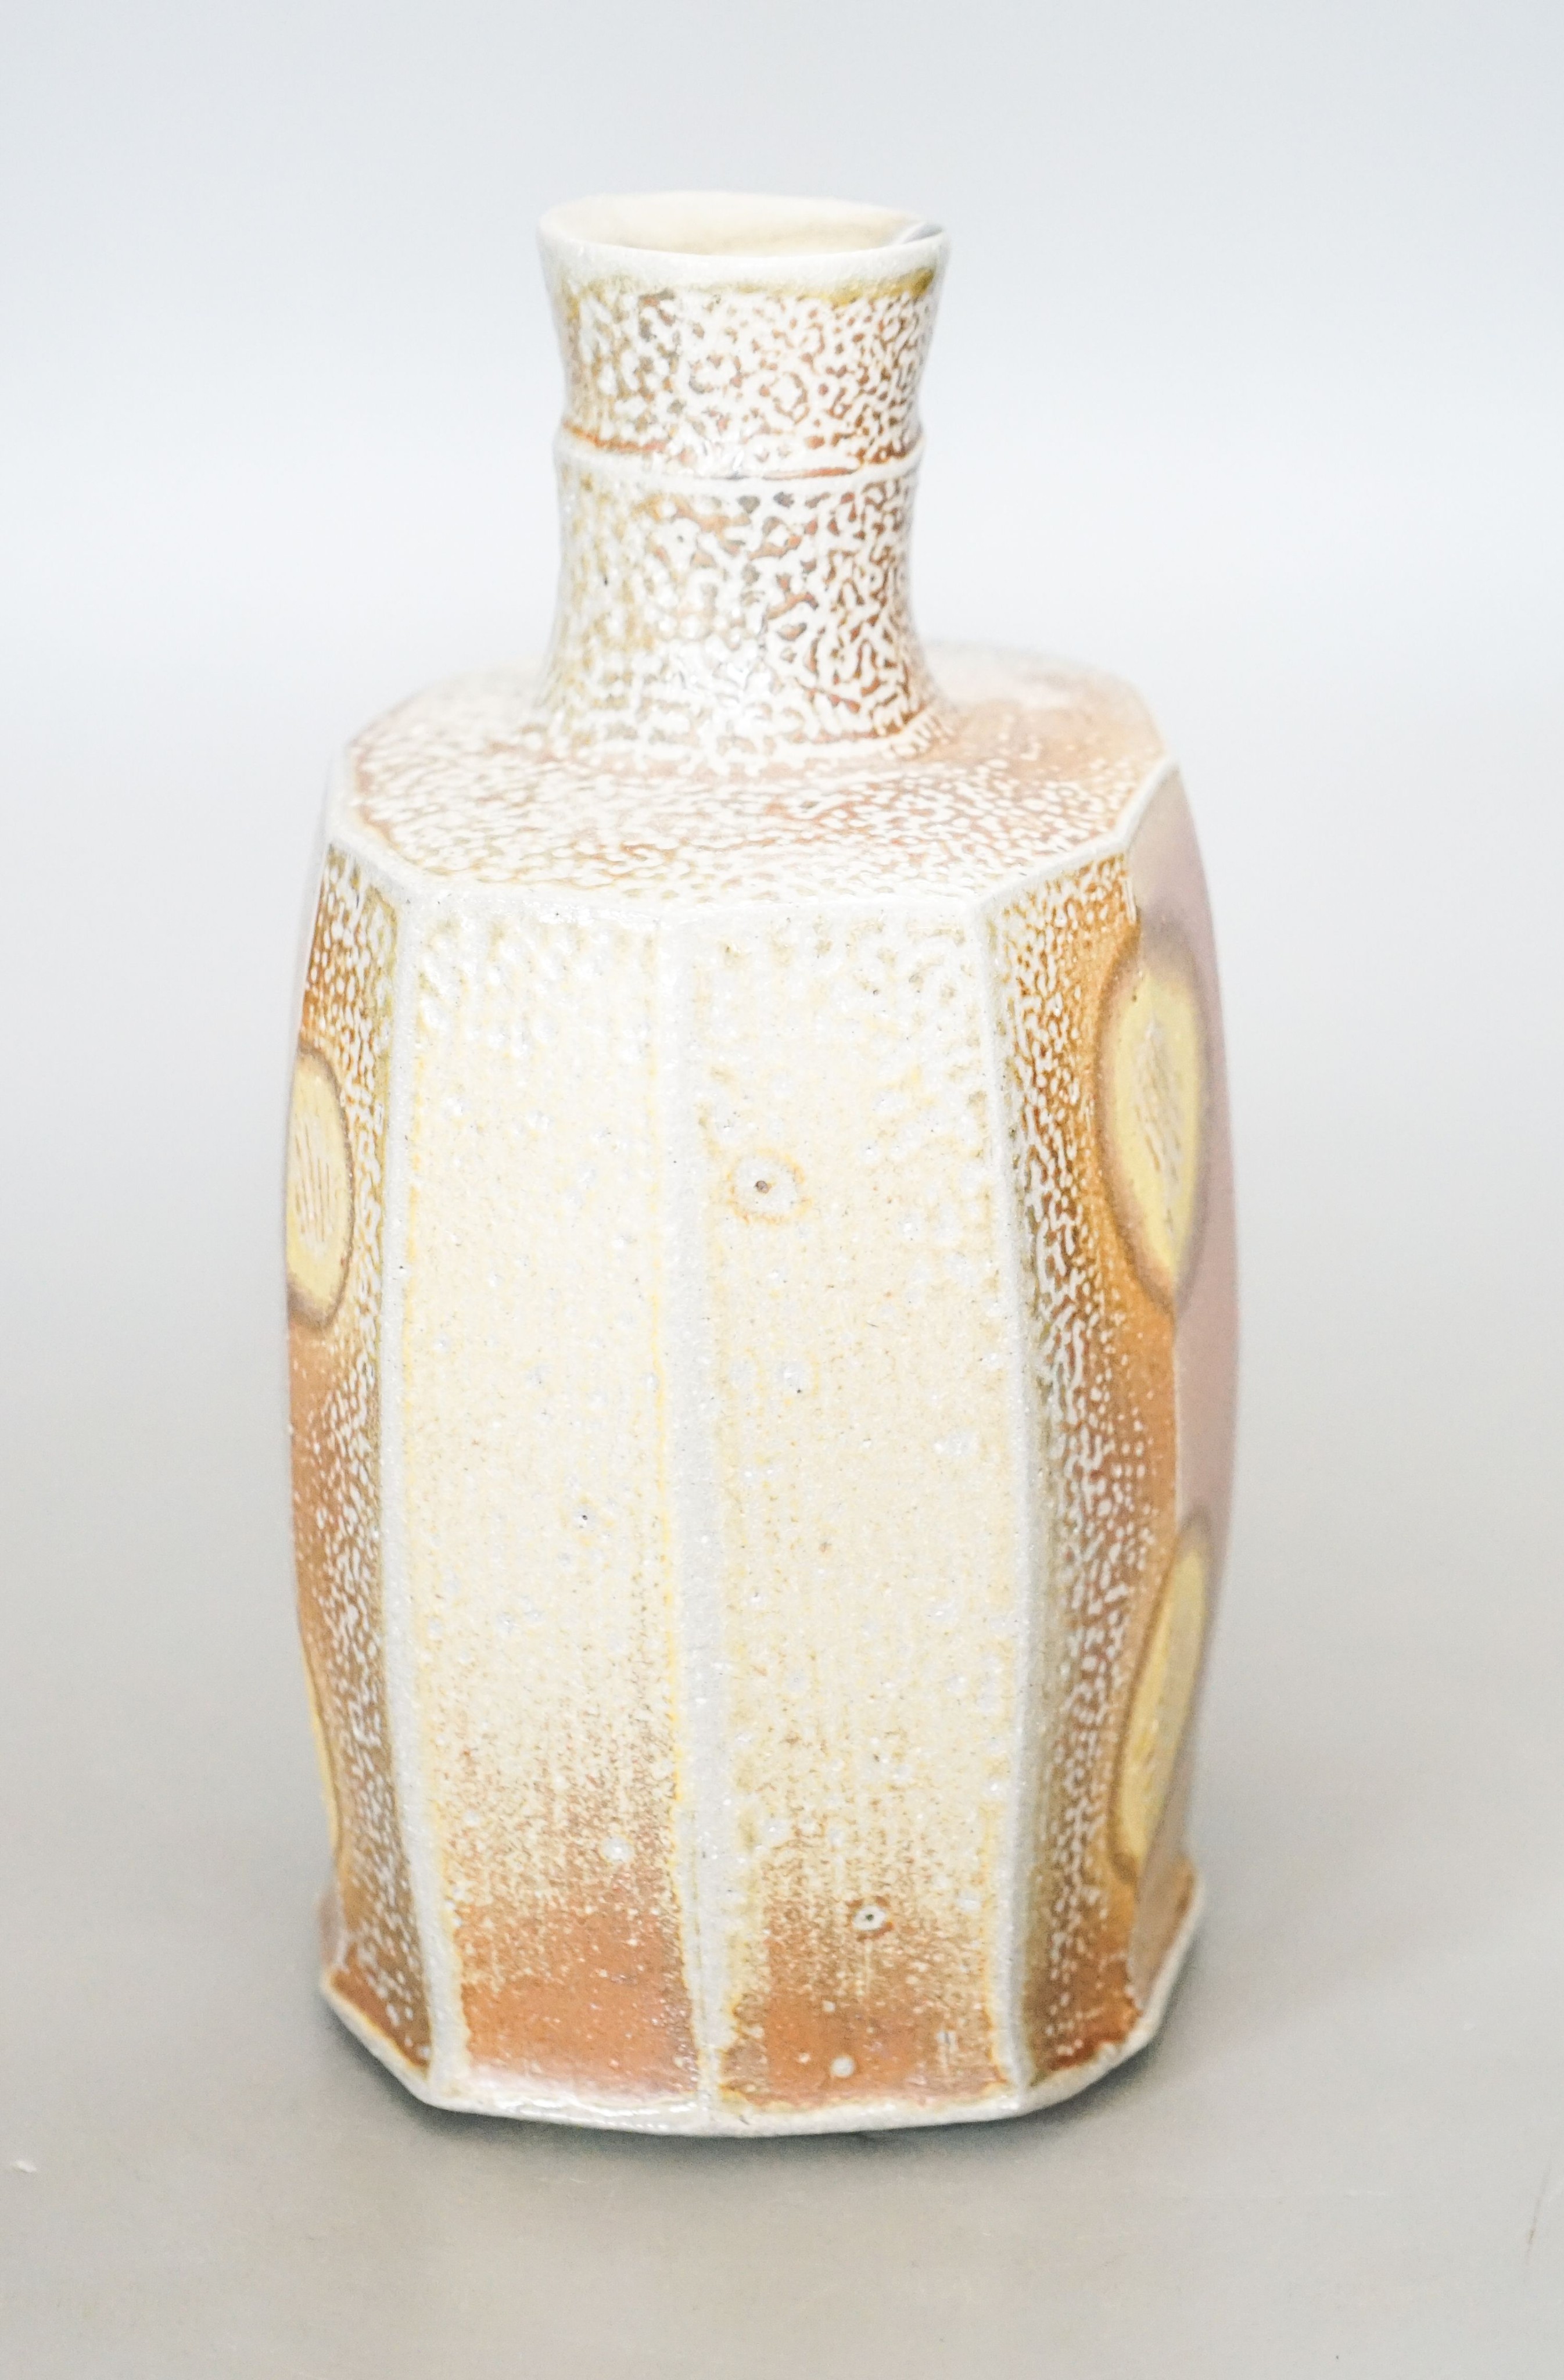 Phil Rogers (1951-2020), a faceted bottle 21cm